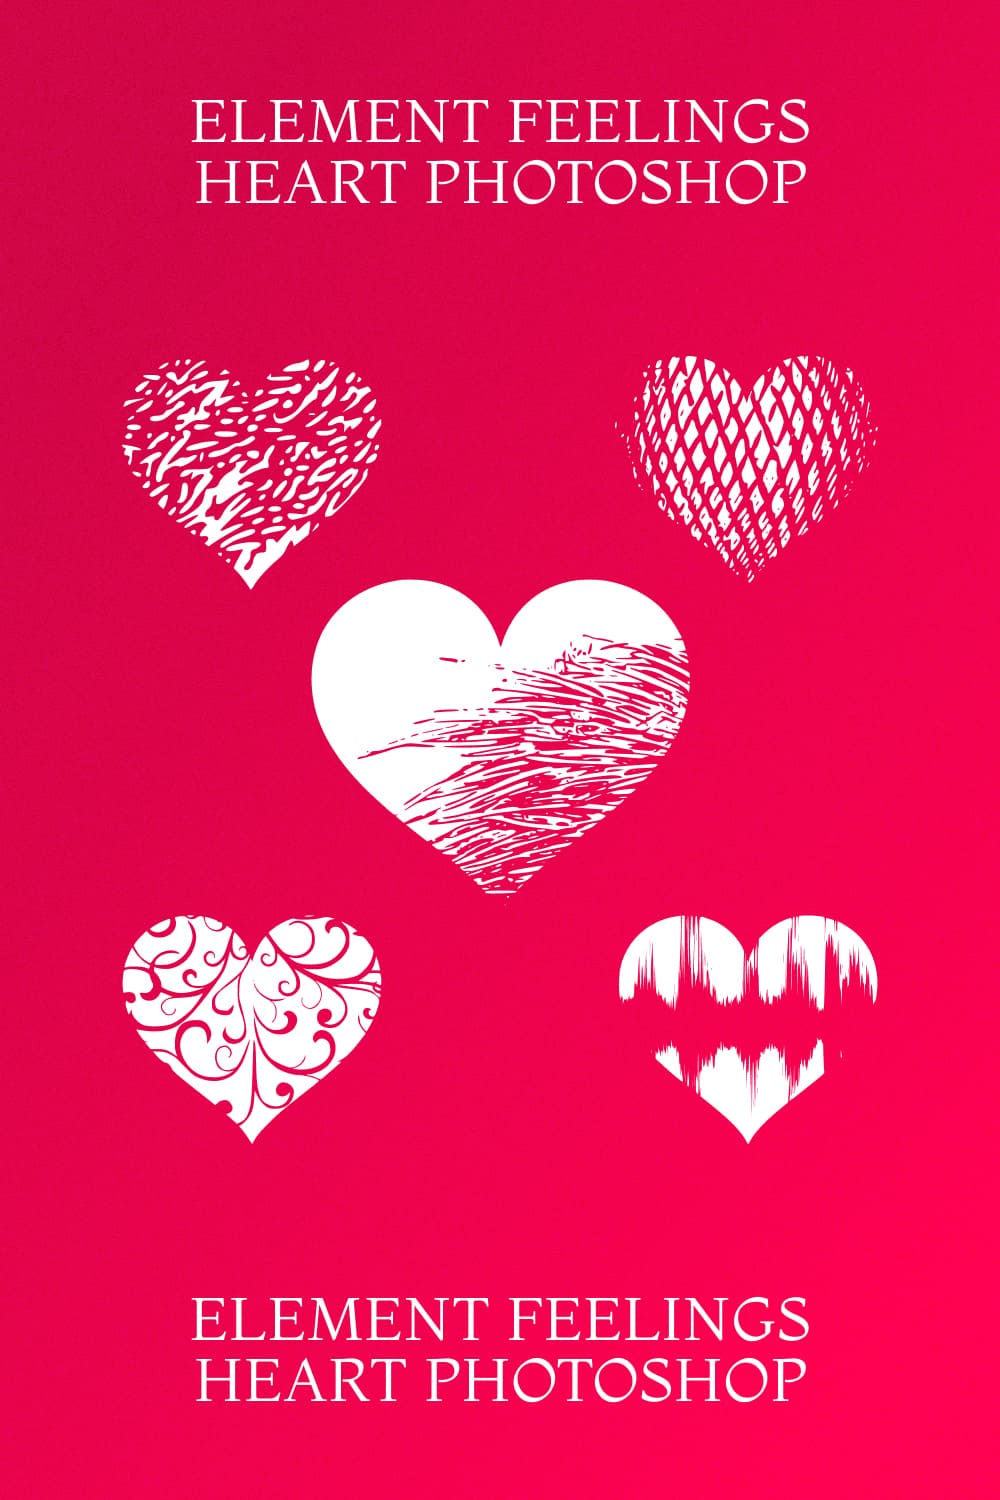 Element Feelings Heart Photoshop - Pinterest Image.